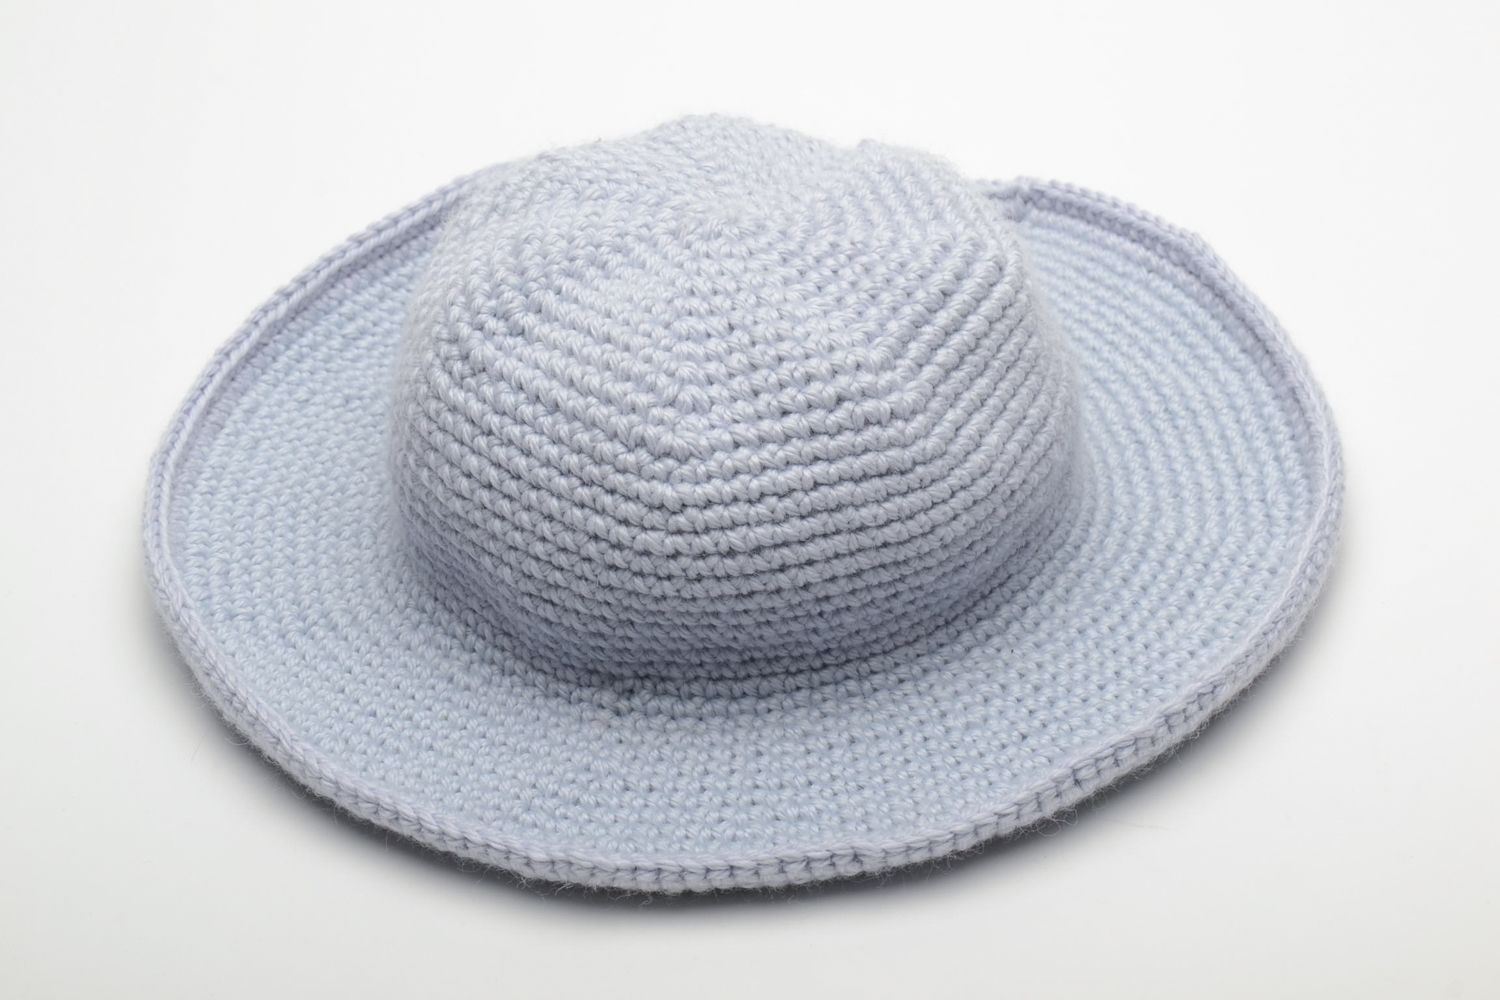 Blue crochet broad hat photo 3